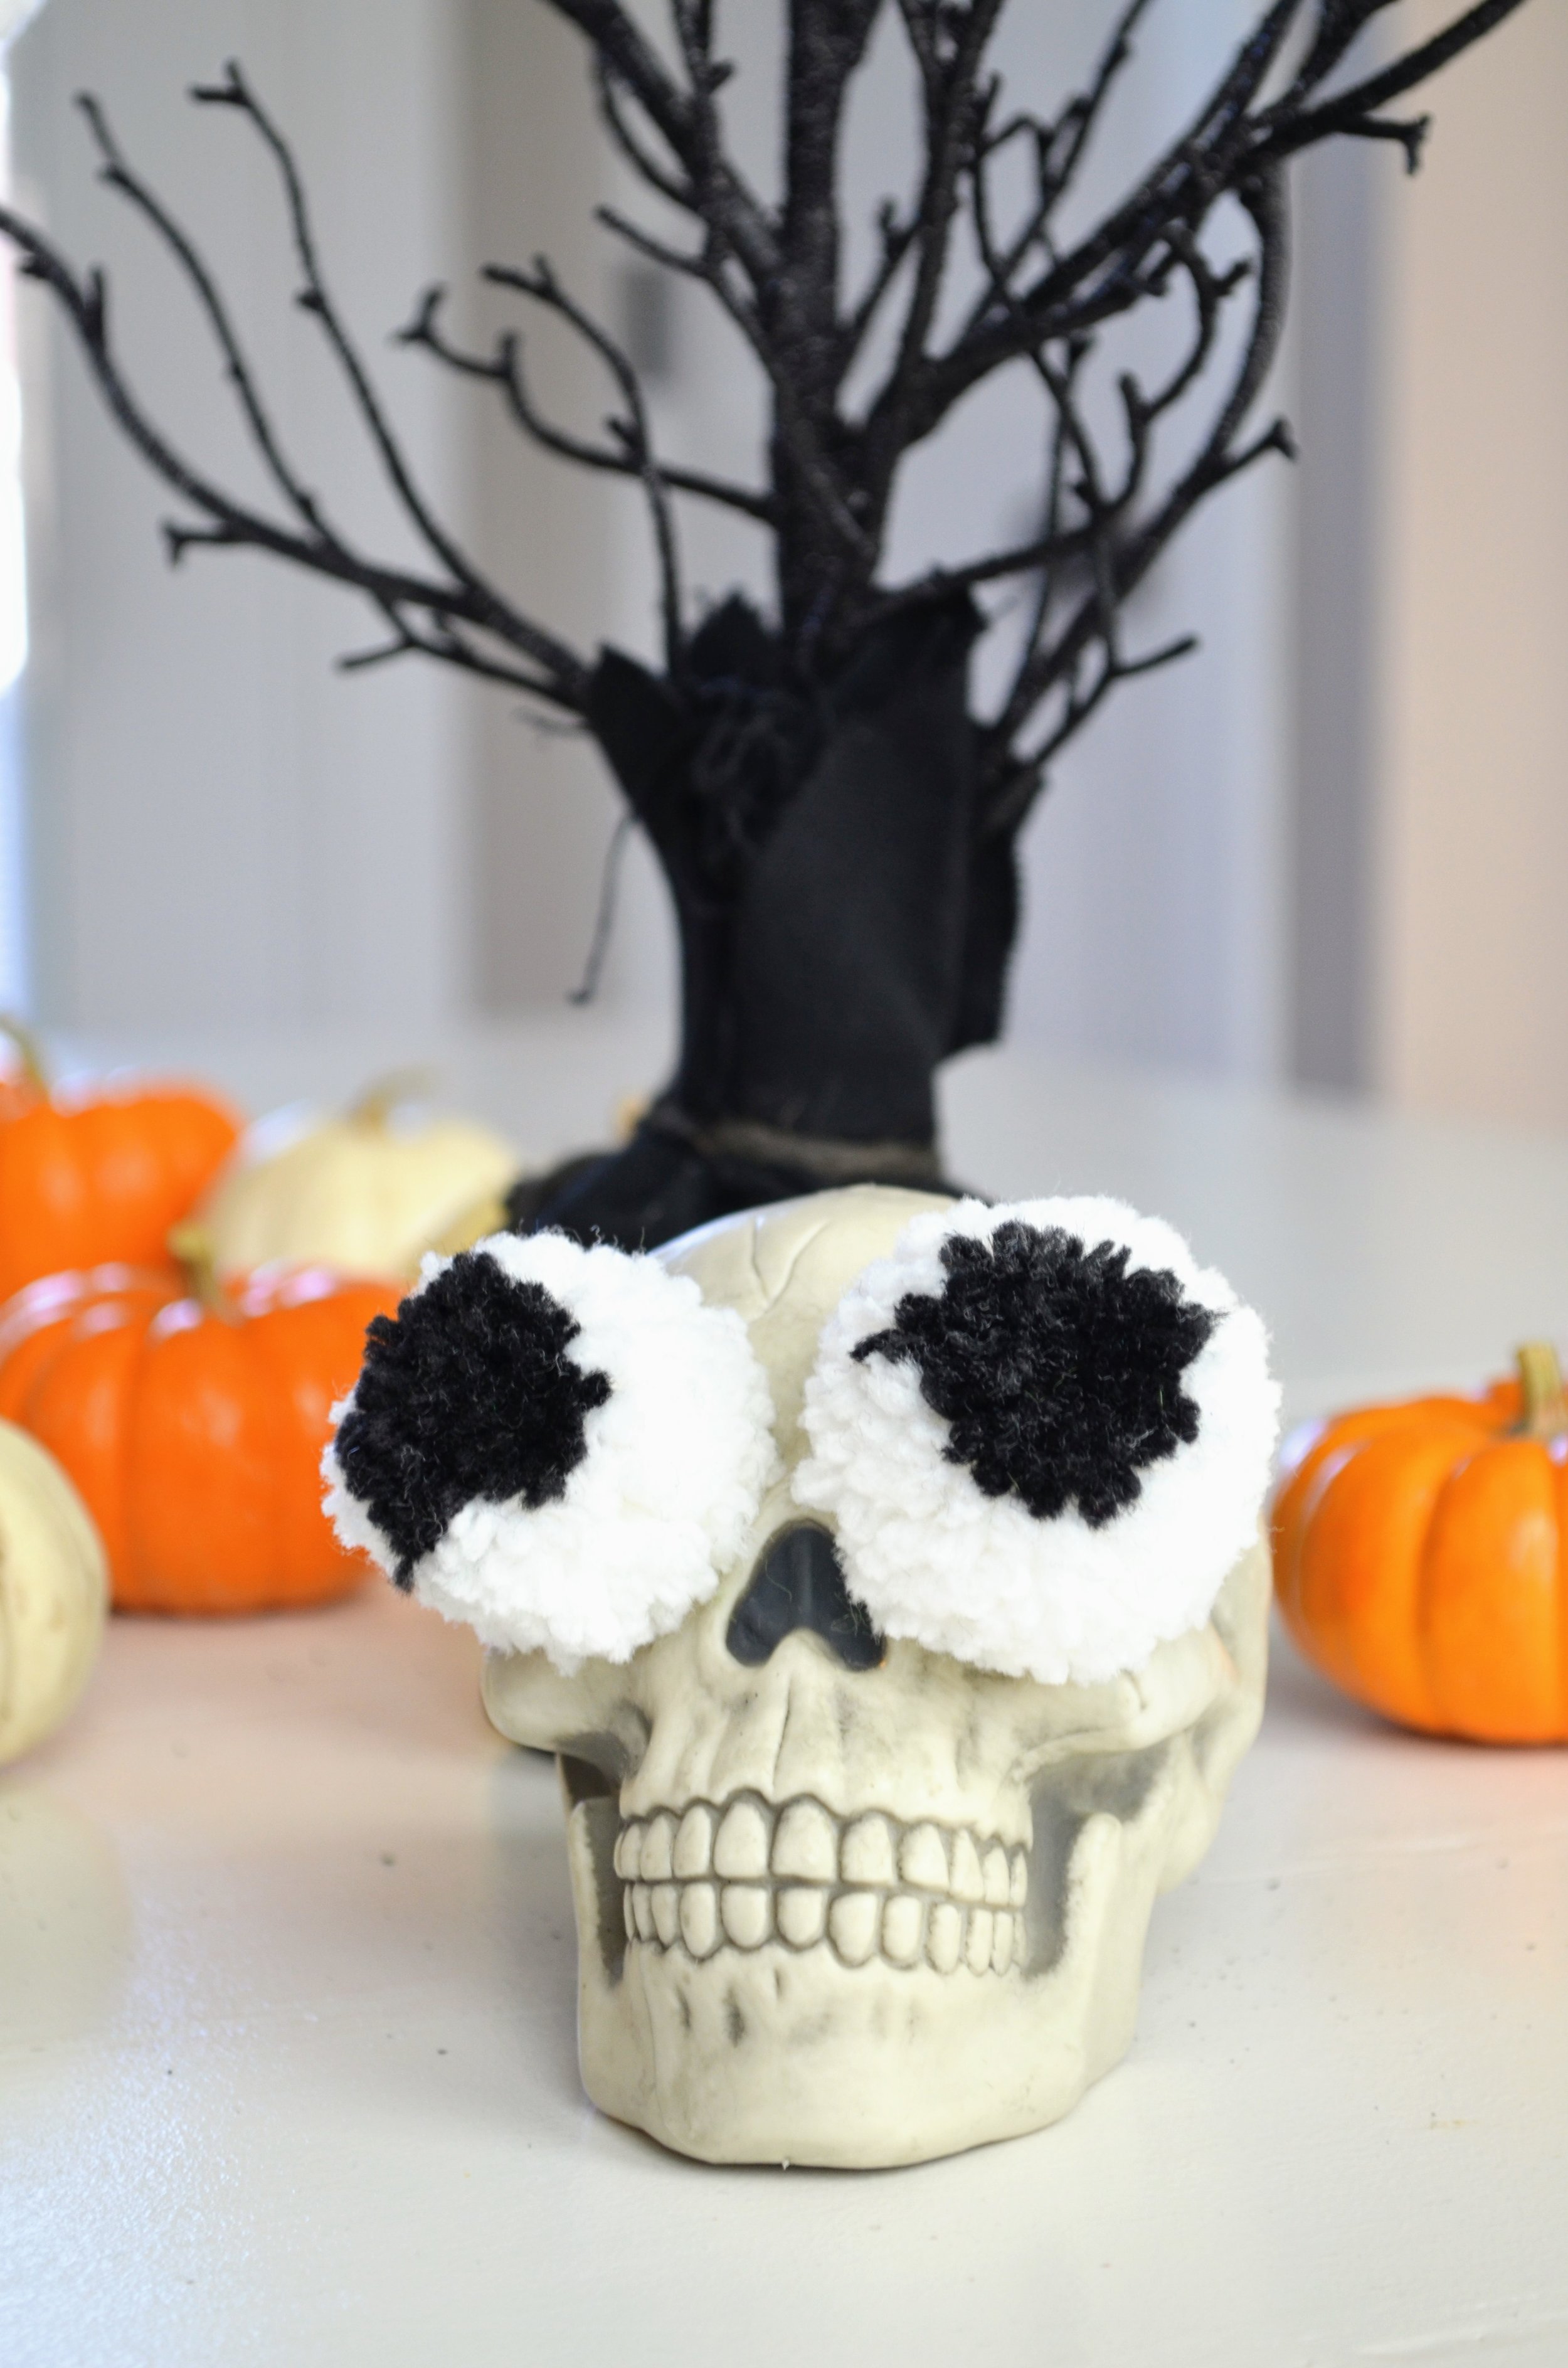 Eyeballs and Ghosts - Spooky Handmade Halloween Decor! — Apricot ...